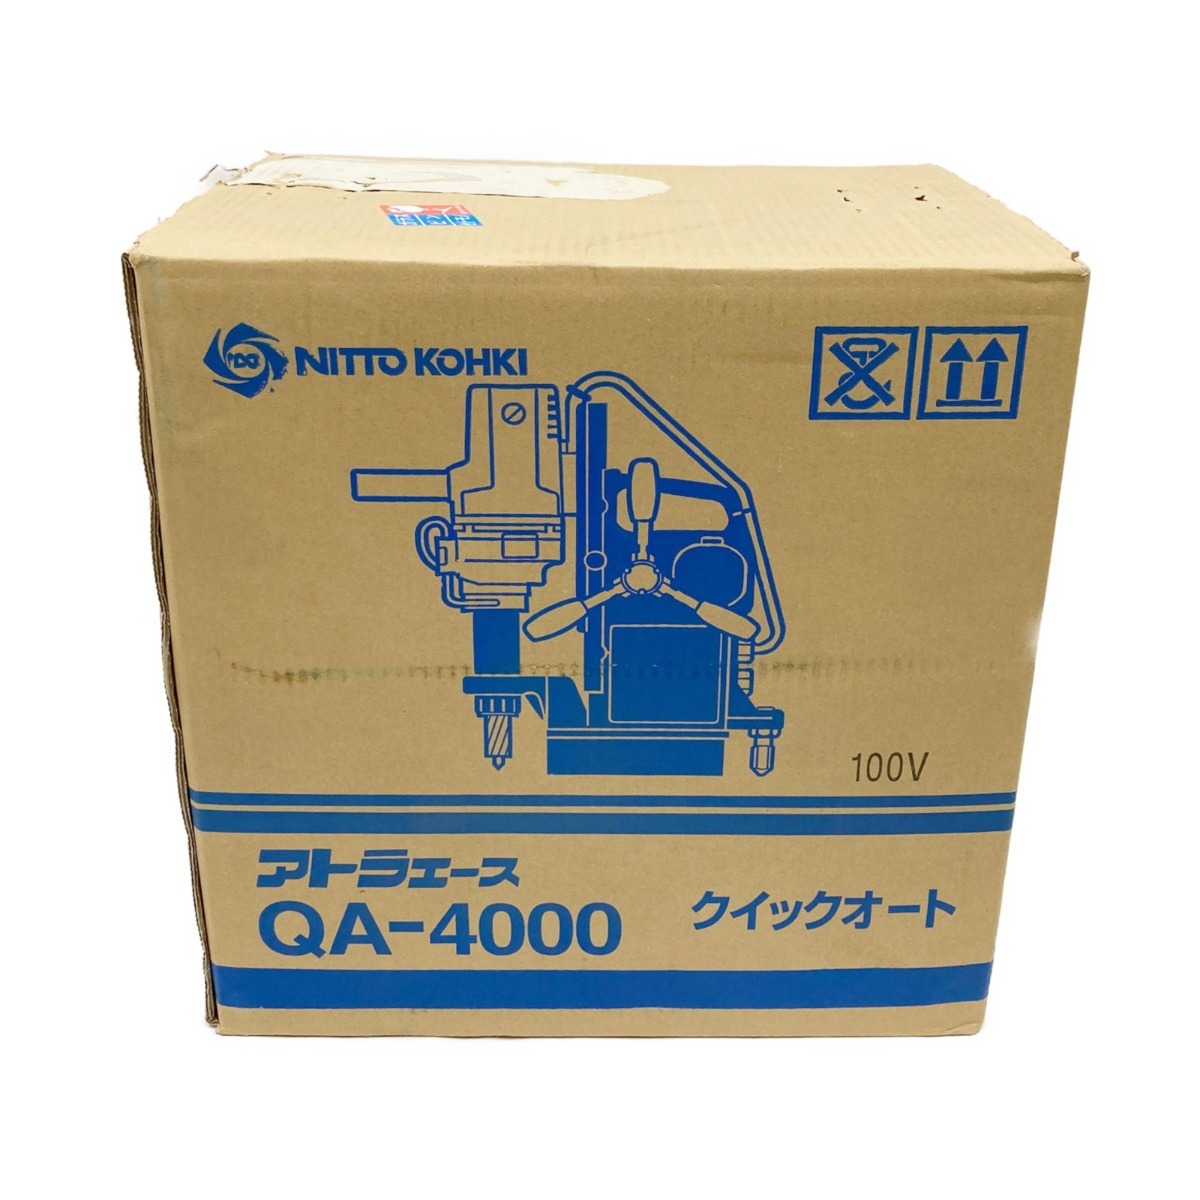 〇〇 日東工器 NITTO KOHKI 携帯式磁気応用穴あけ機 磁気ボール盤 QA-4000 未開封品 未使用